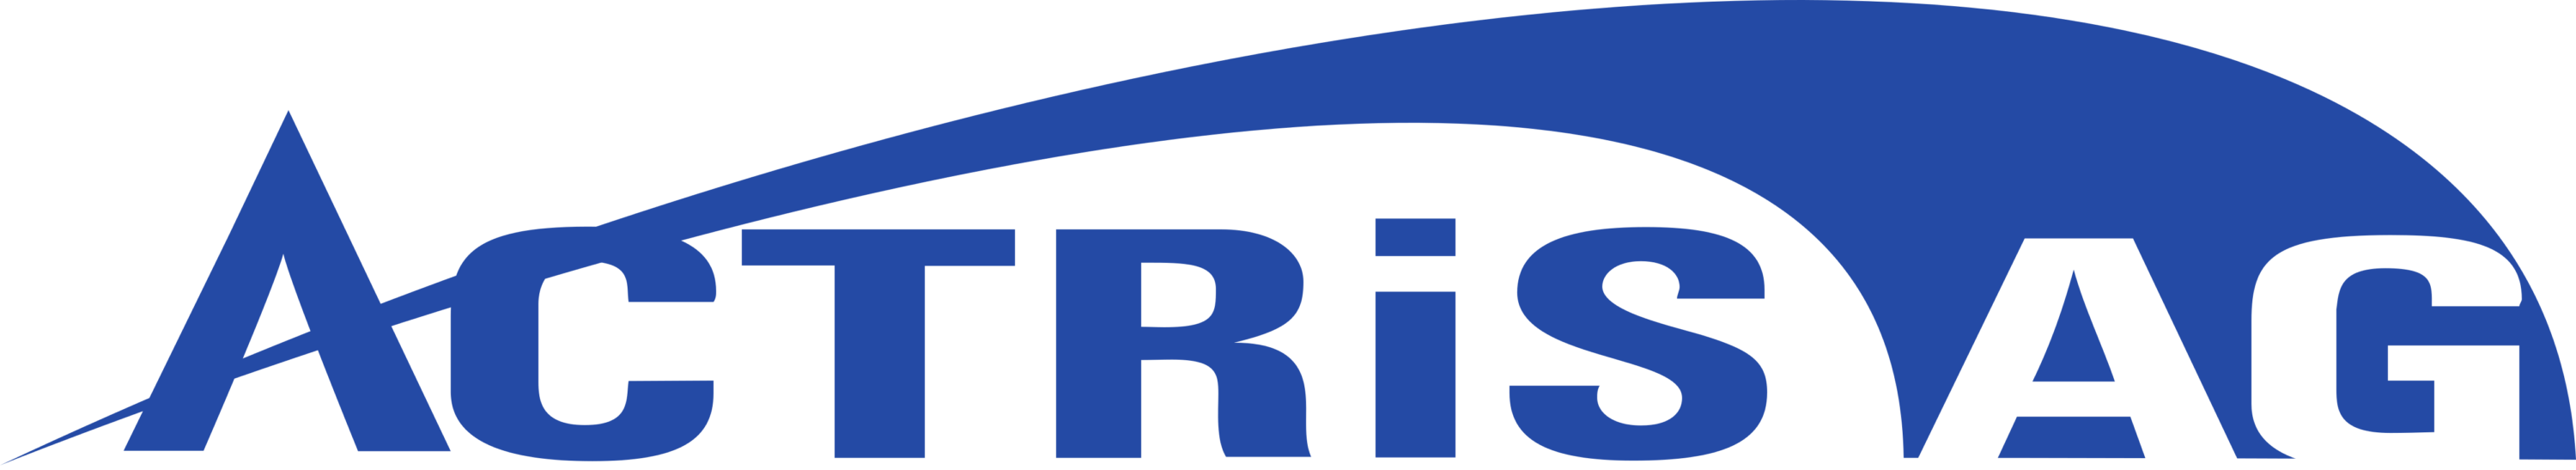 Actris AG Logo